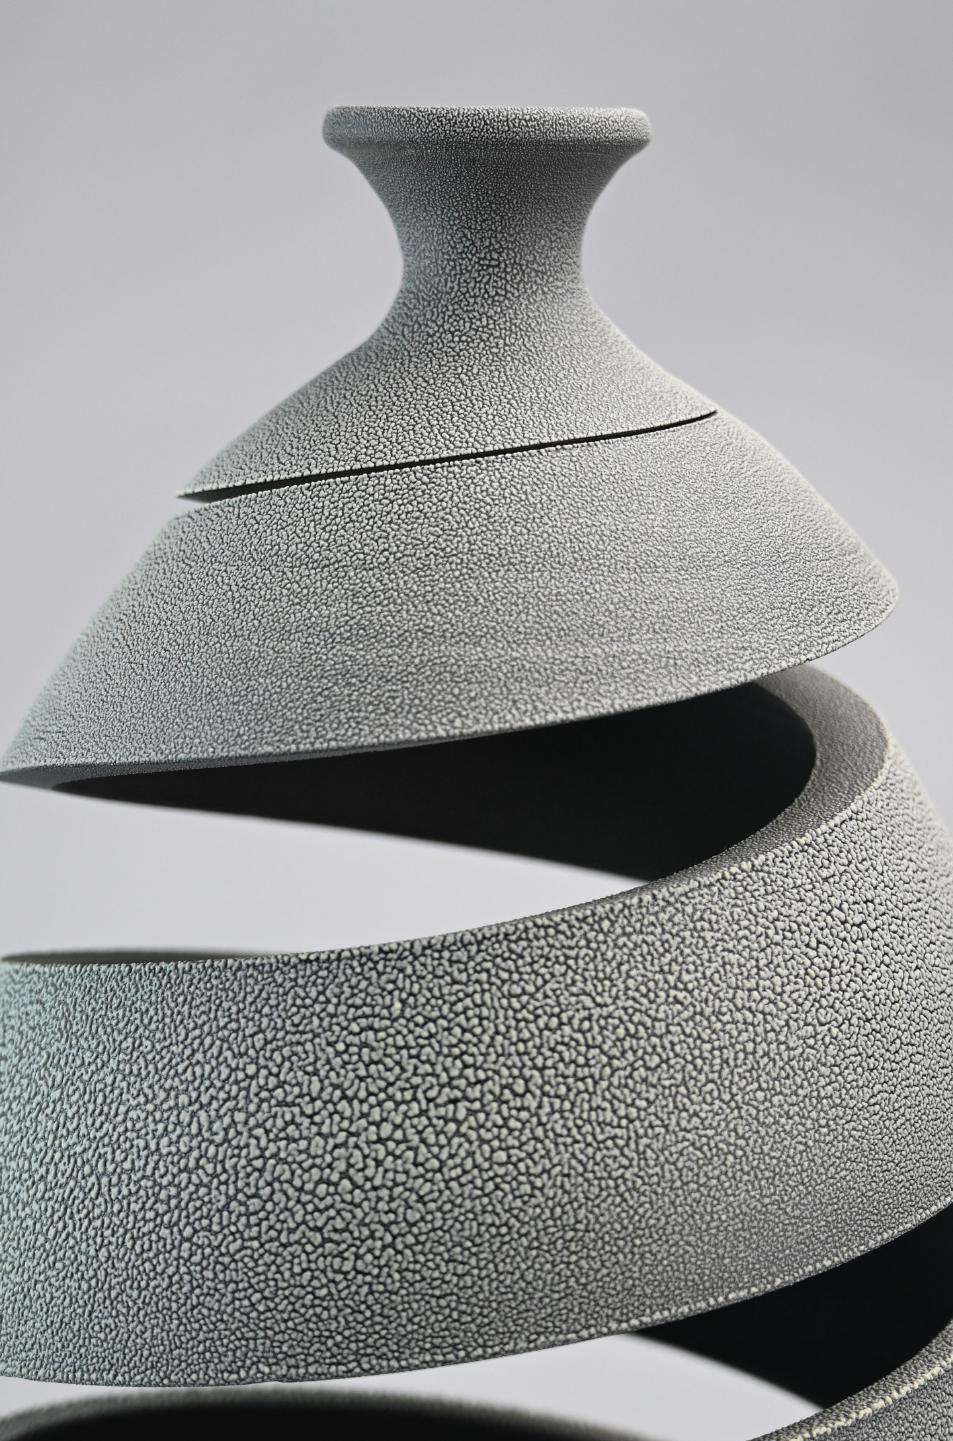 abstract ceramics